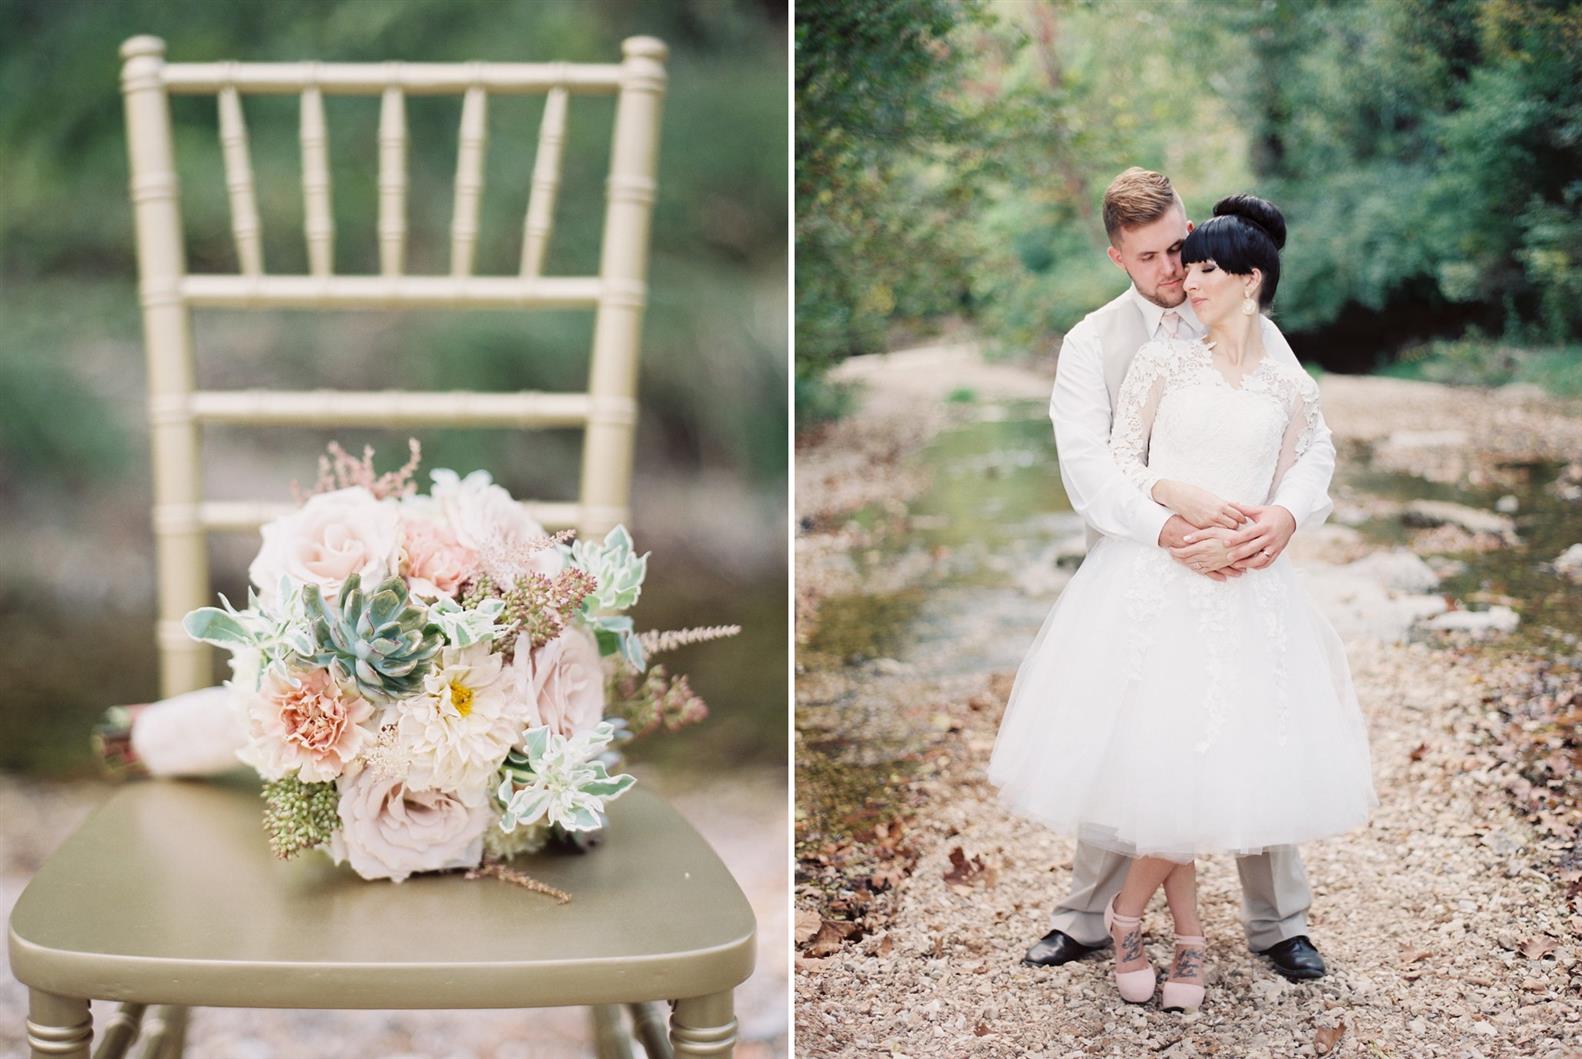 Bridal Bouquet - A Stylish Modern-Vintage Blush & Gold Wedding Inspiration Shoot